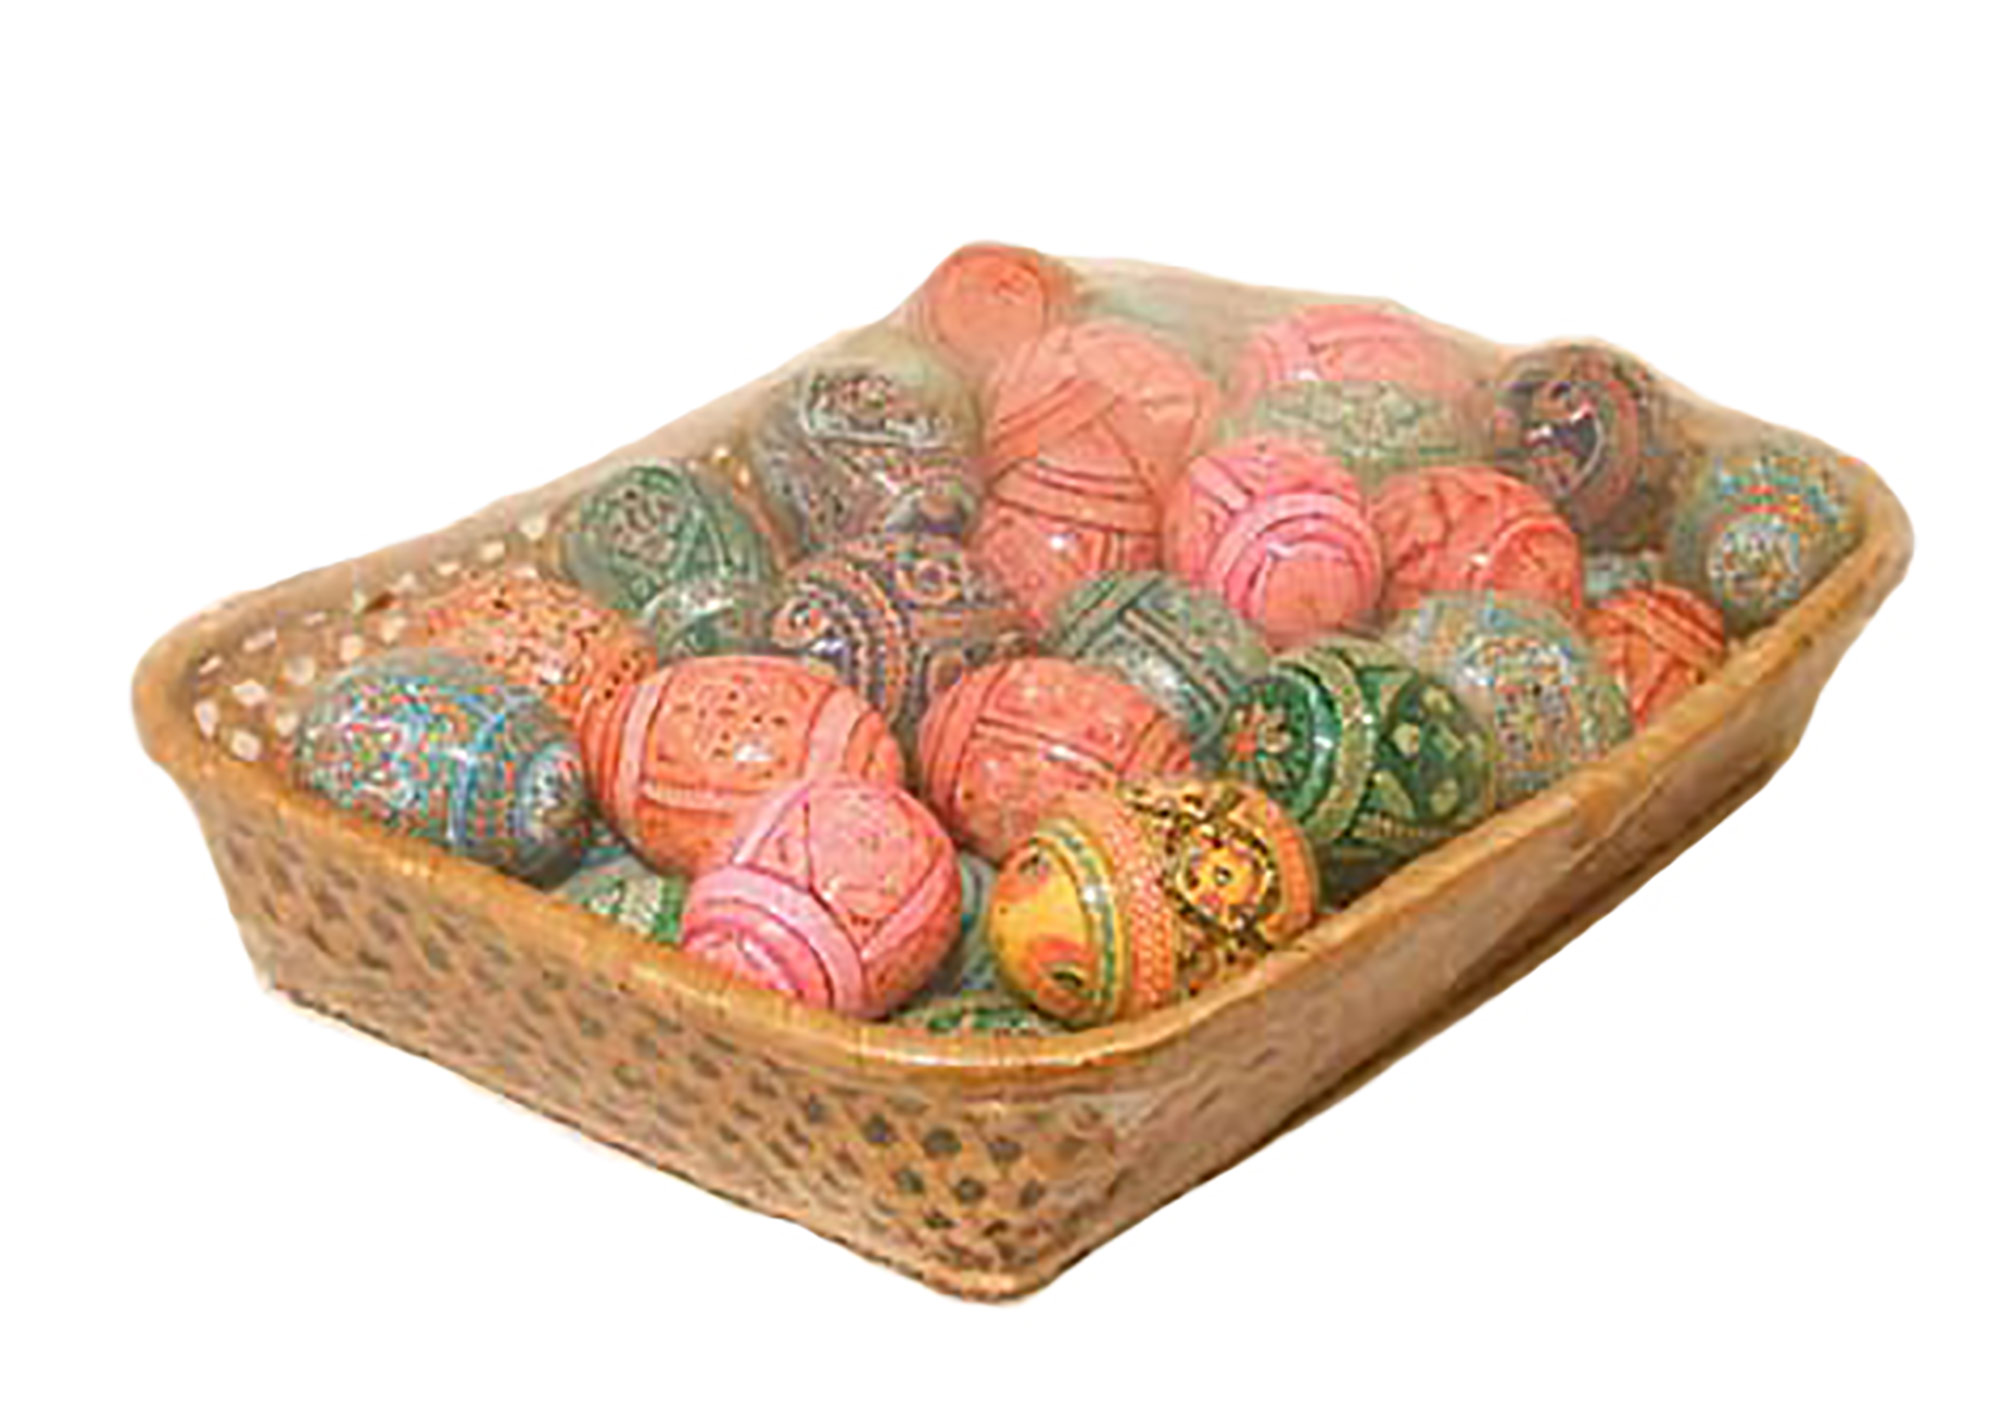 Buy 6 Ukrainian Pisanki Easter Eggs, Wood 2.5" at GoldenCockerel.com